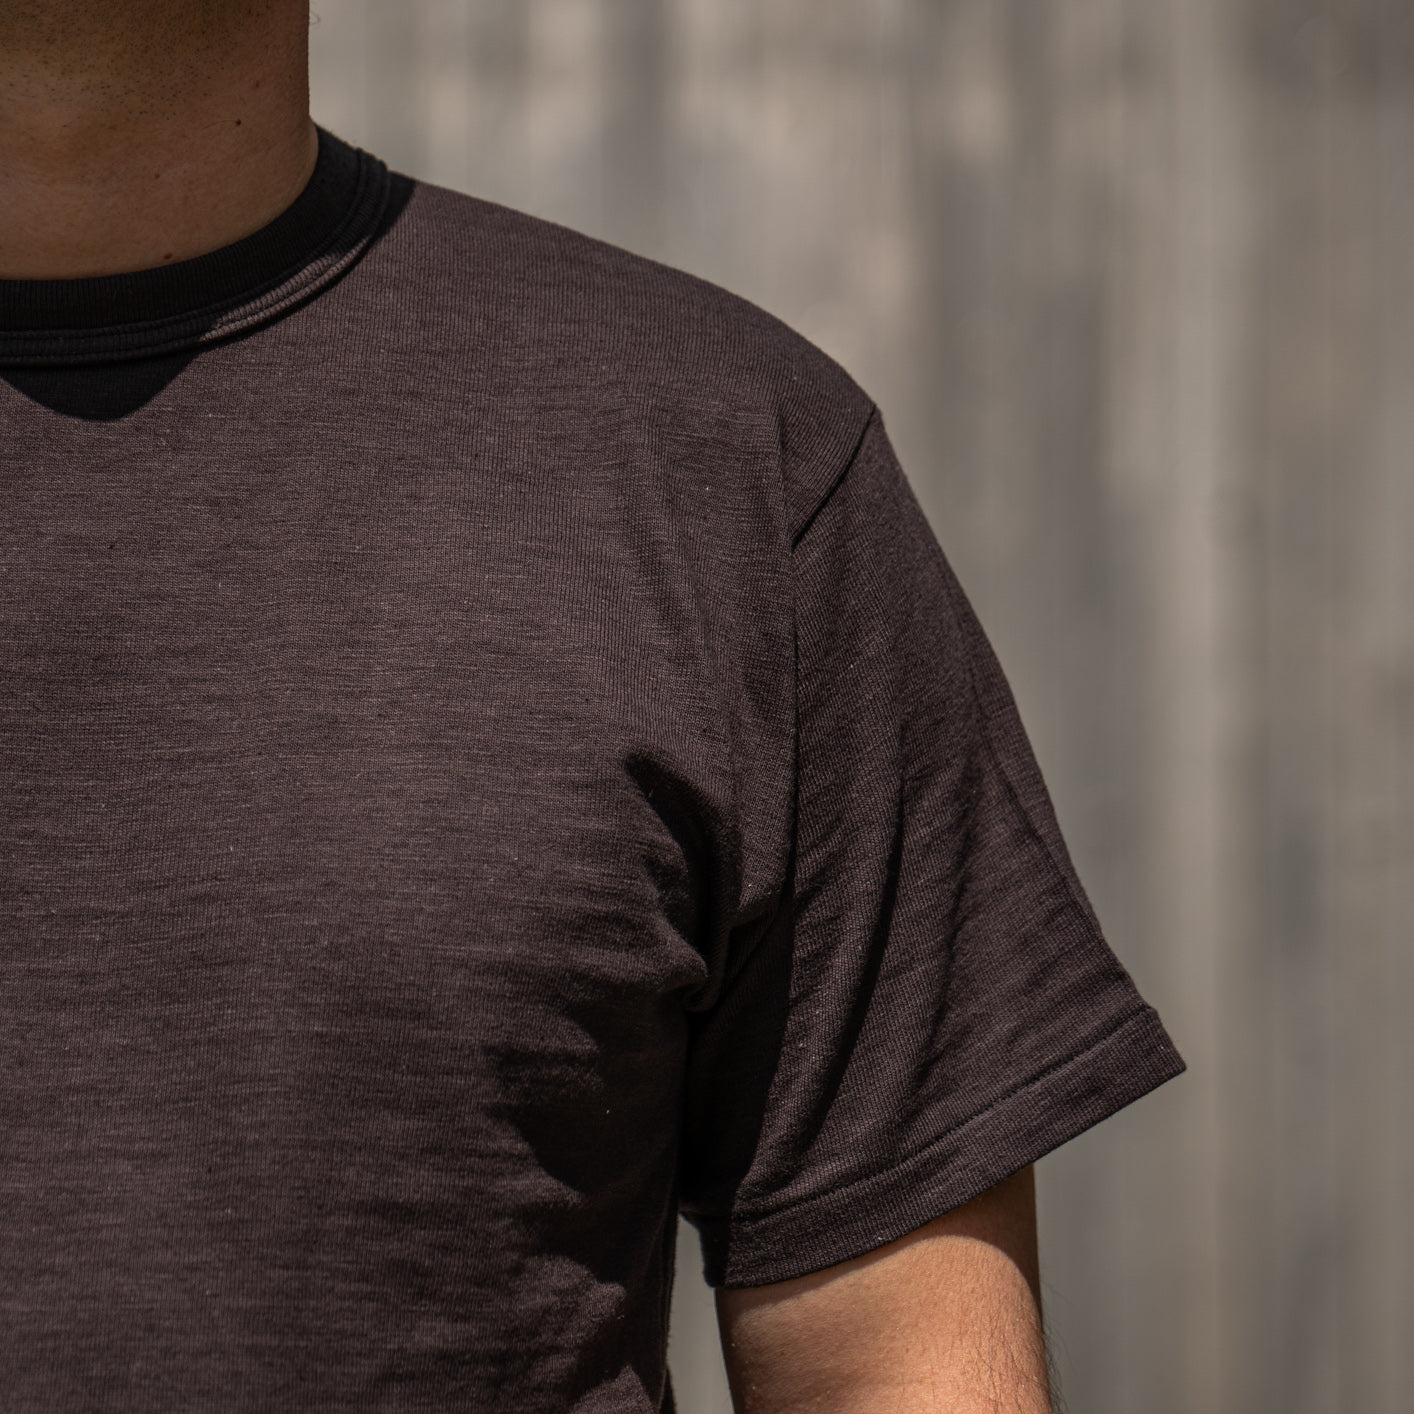 Warehouse Co. Lot - Slub Yarn (Black) T-Shirt 4601 Sumikuro